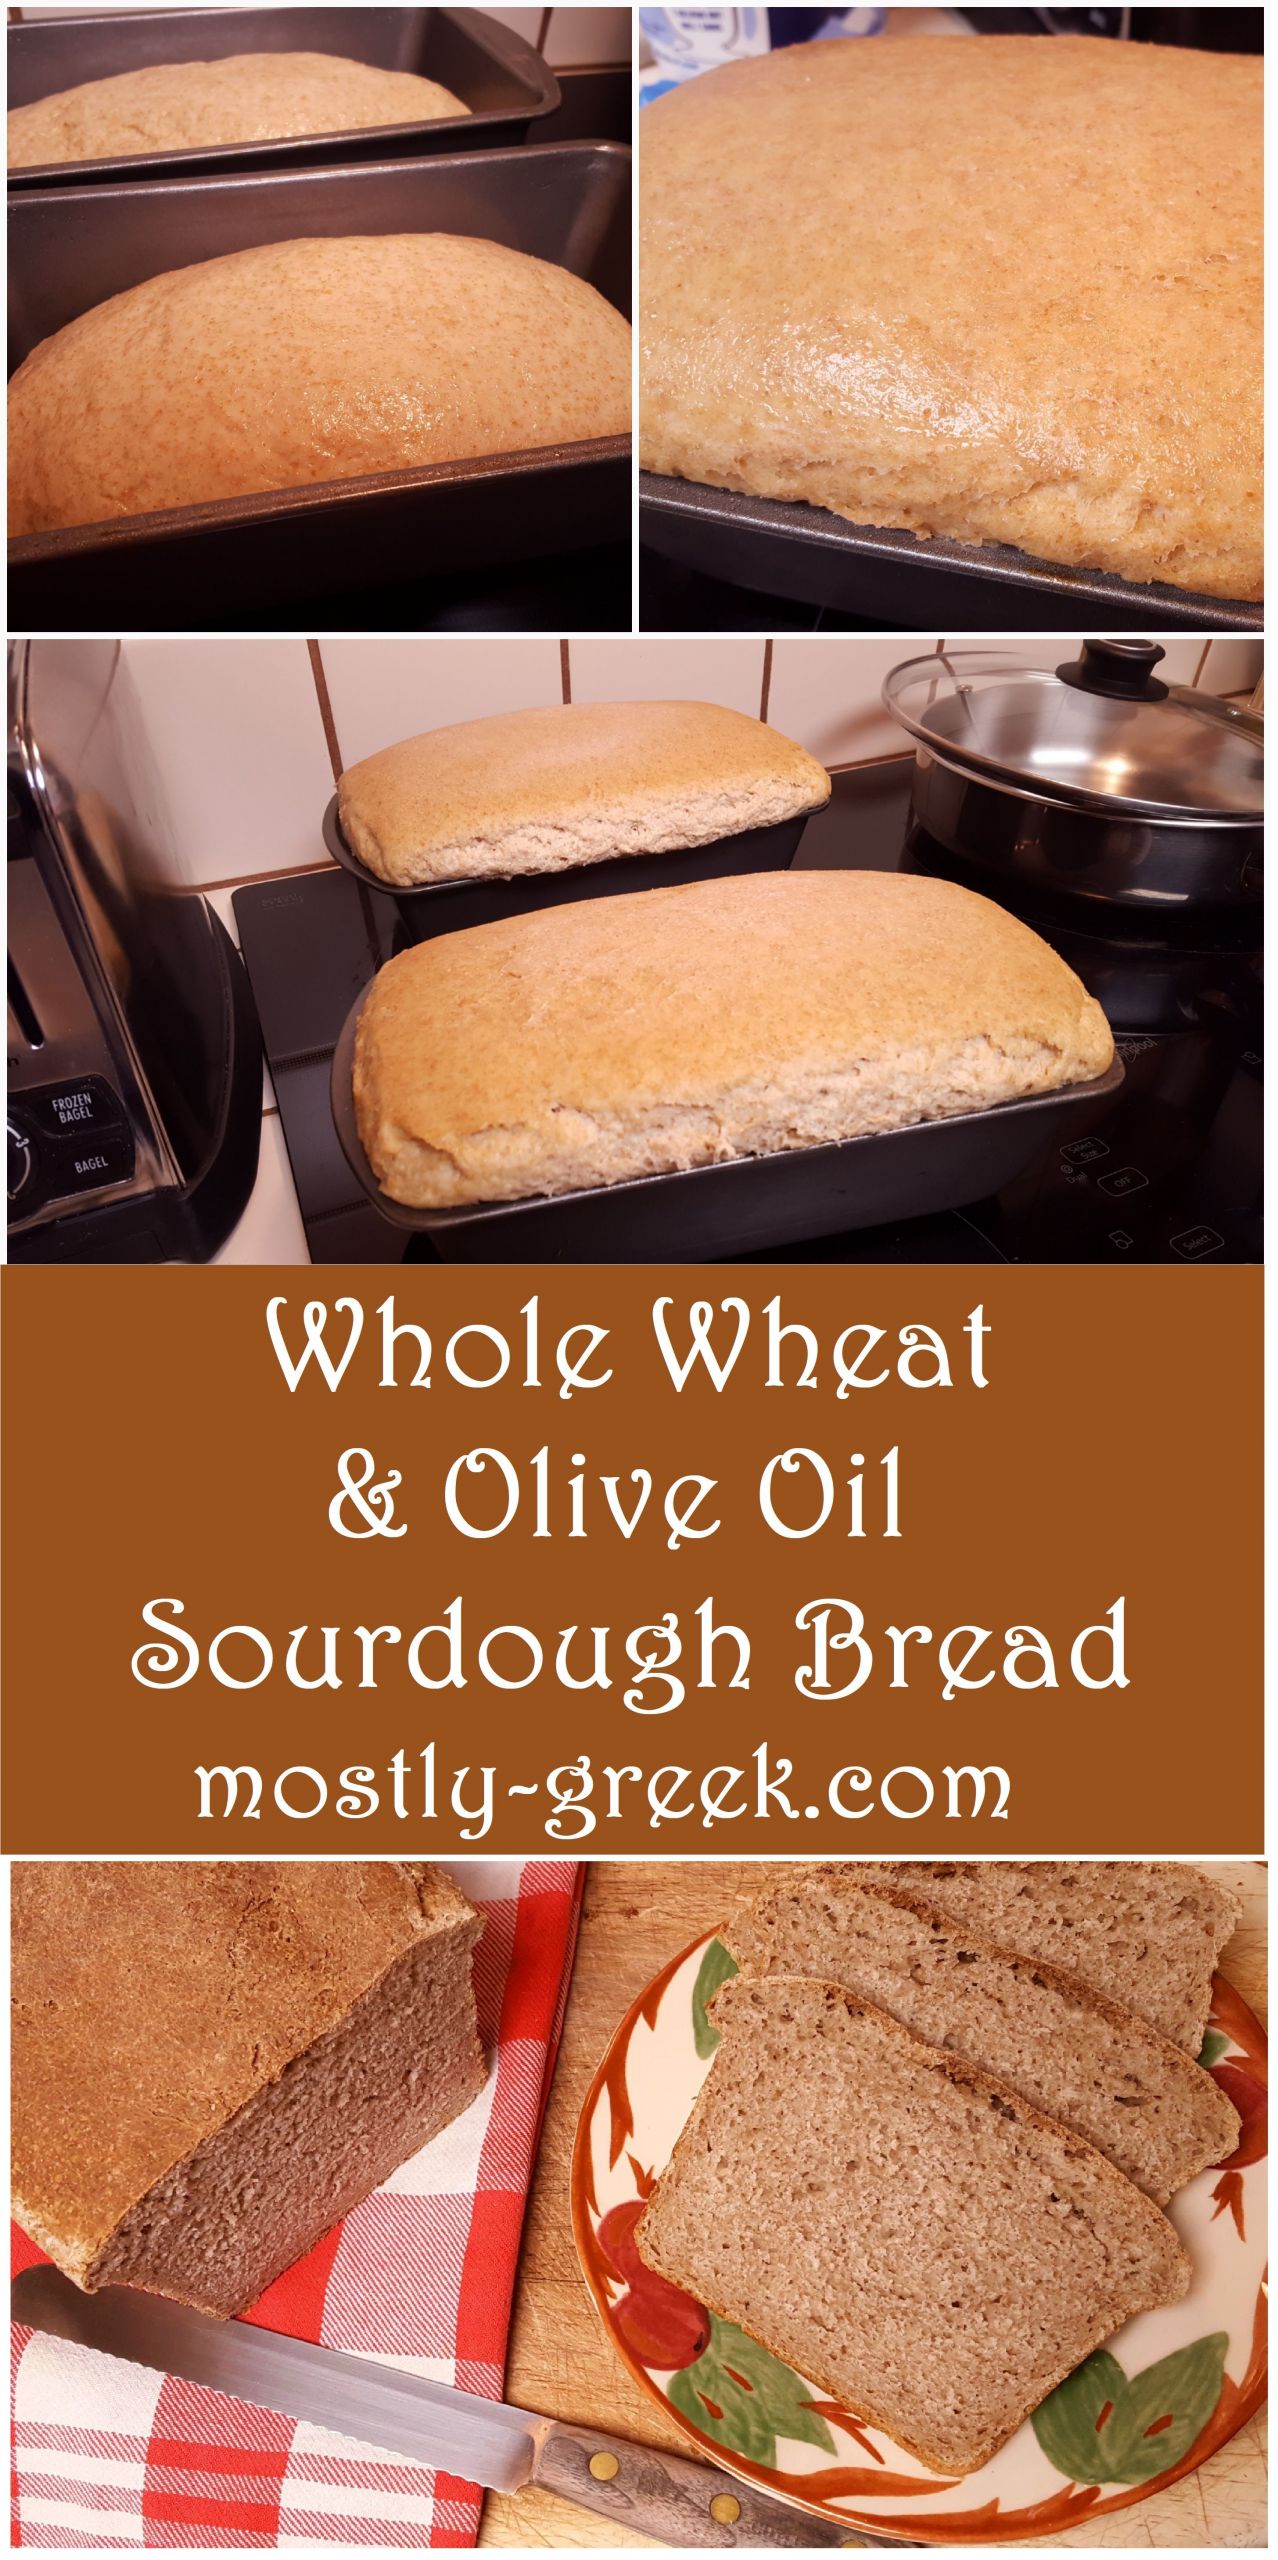 Fiber In Sourdough Bread
 Whole Wheat & Olive Oil Sourdough Bread With images